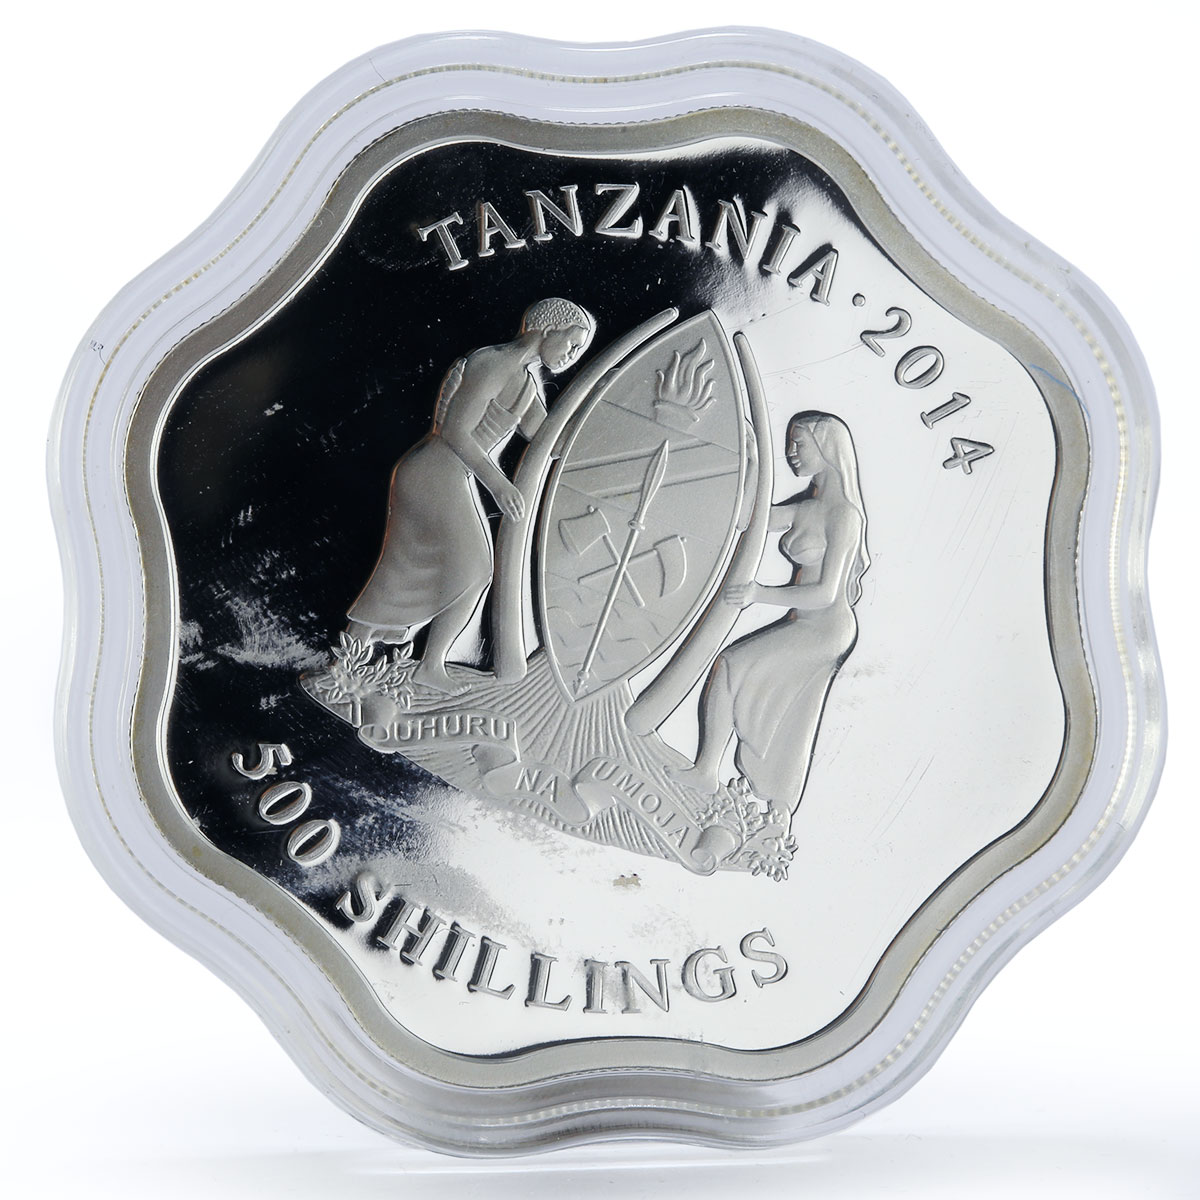 Tanzania 500 shillings Royal Botanic Gardens Singapore colored proof silver 2014